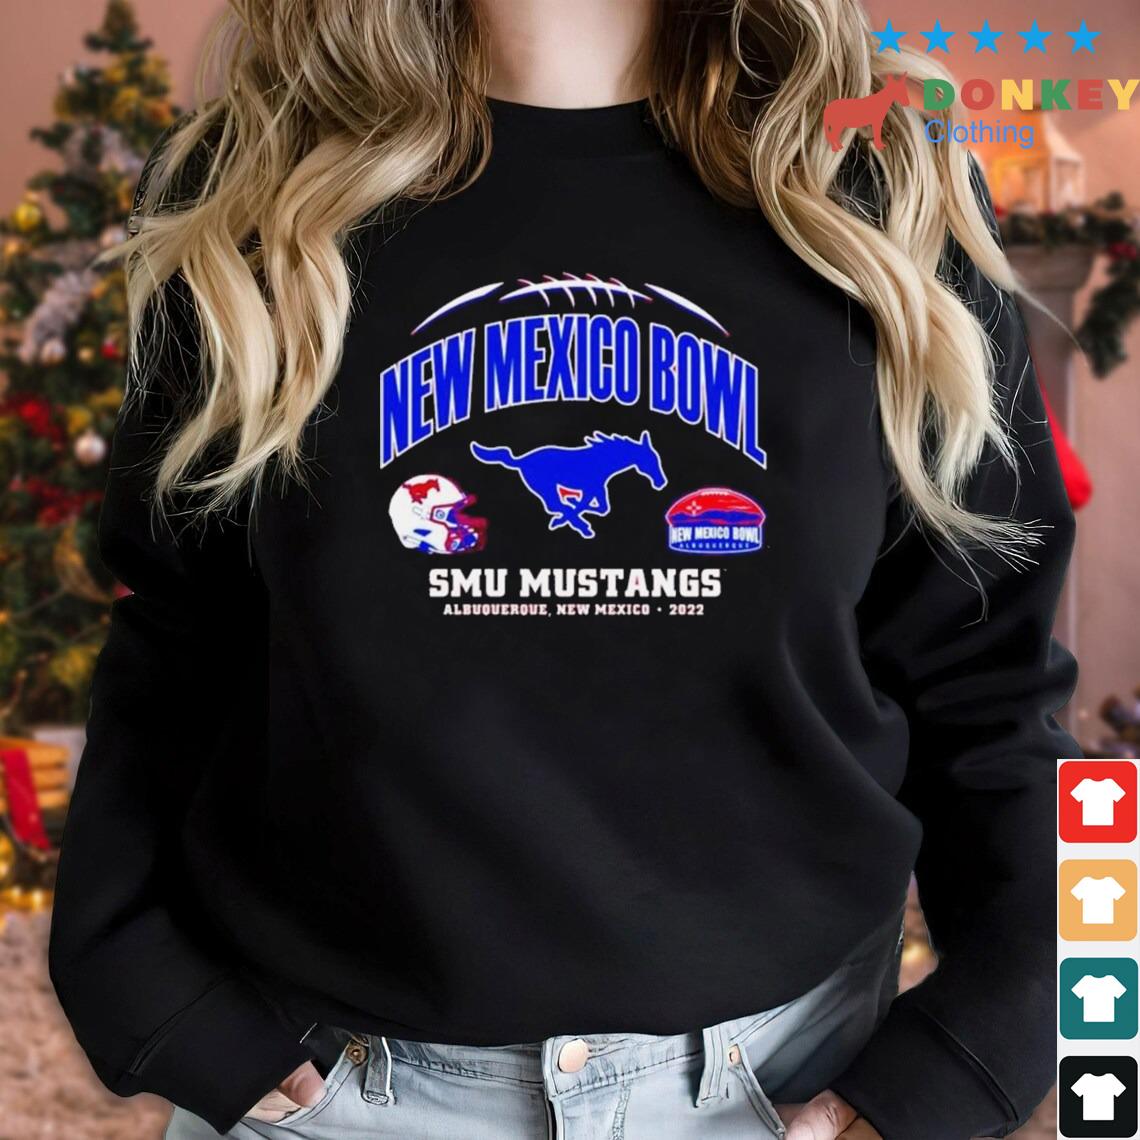 SMU Mustangs New Mexico Bowl 2022 Shirt